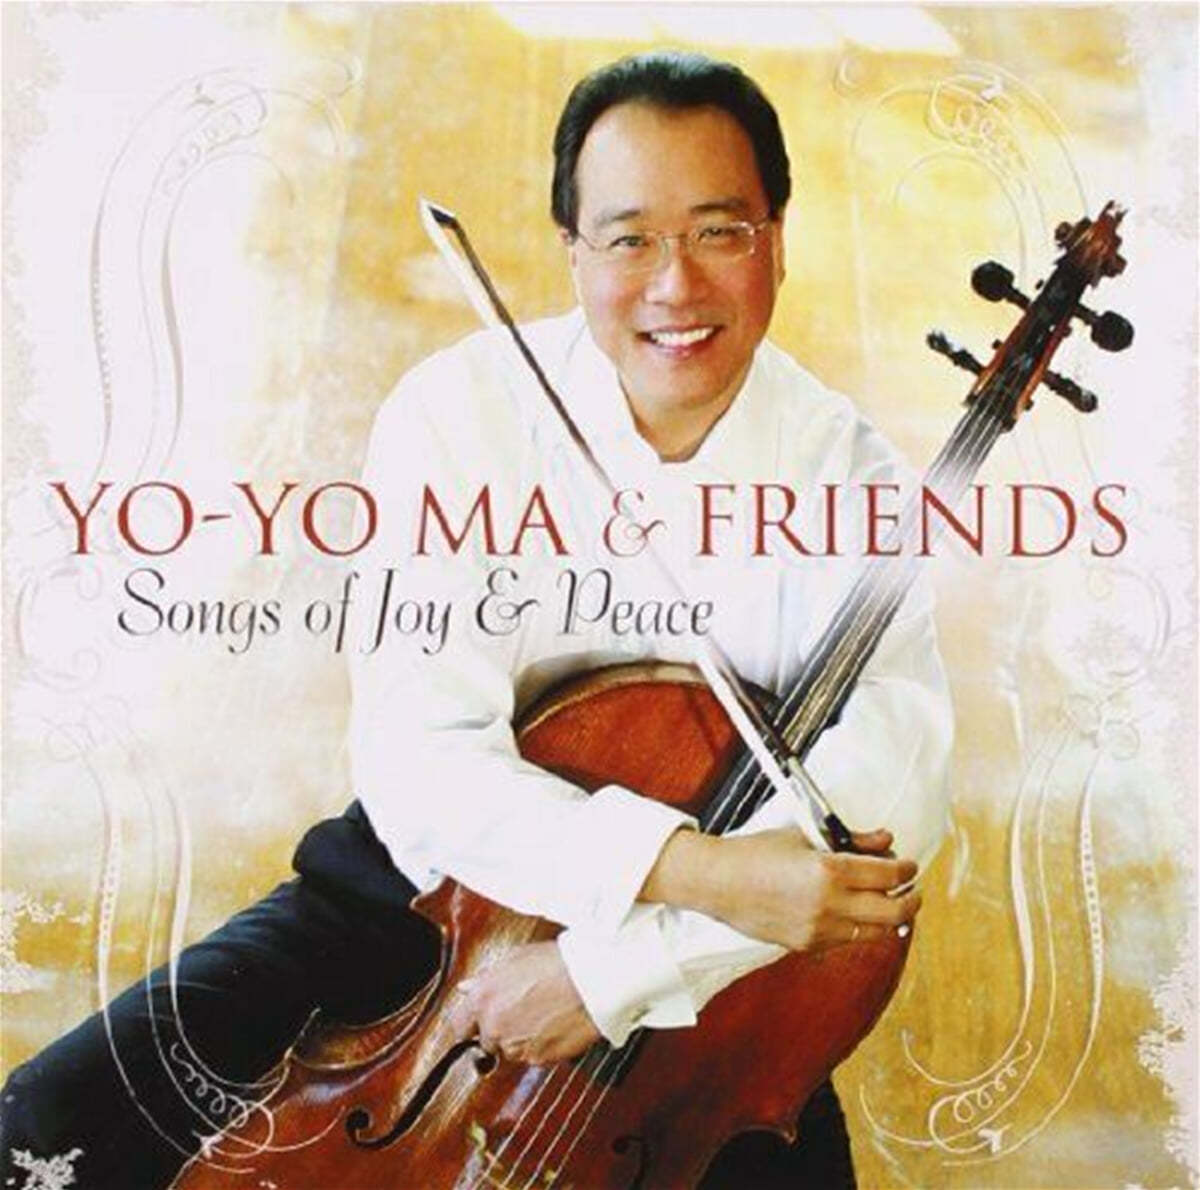 Yo-Yo Ma & Friends 기쁨과 평화의 노래 (Songs of Joy & Peace) 